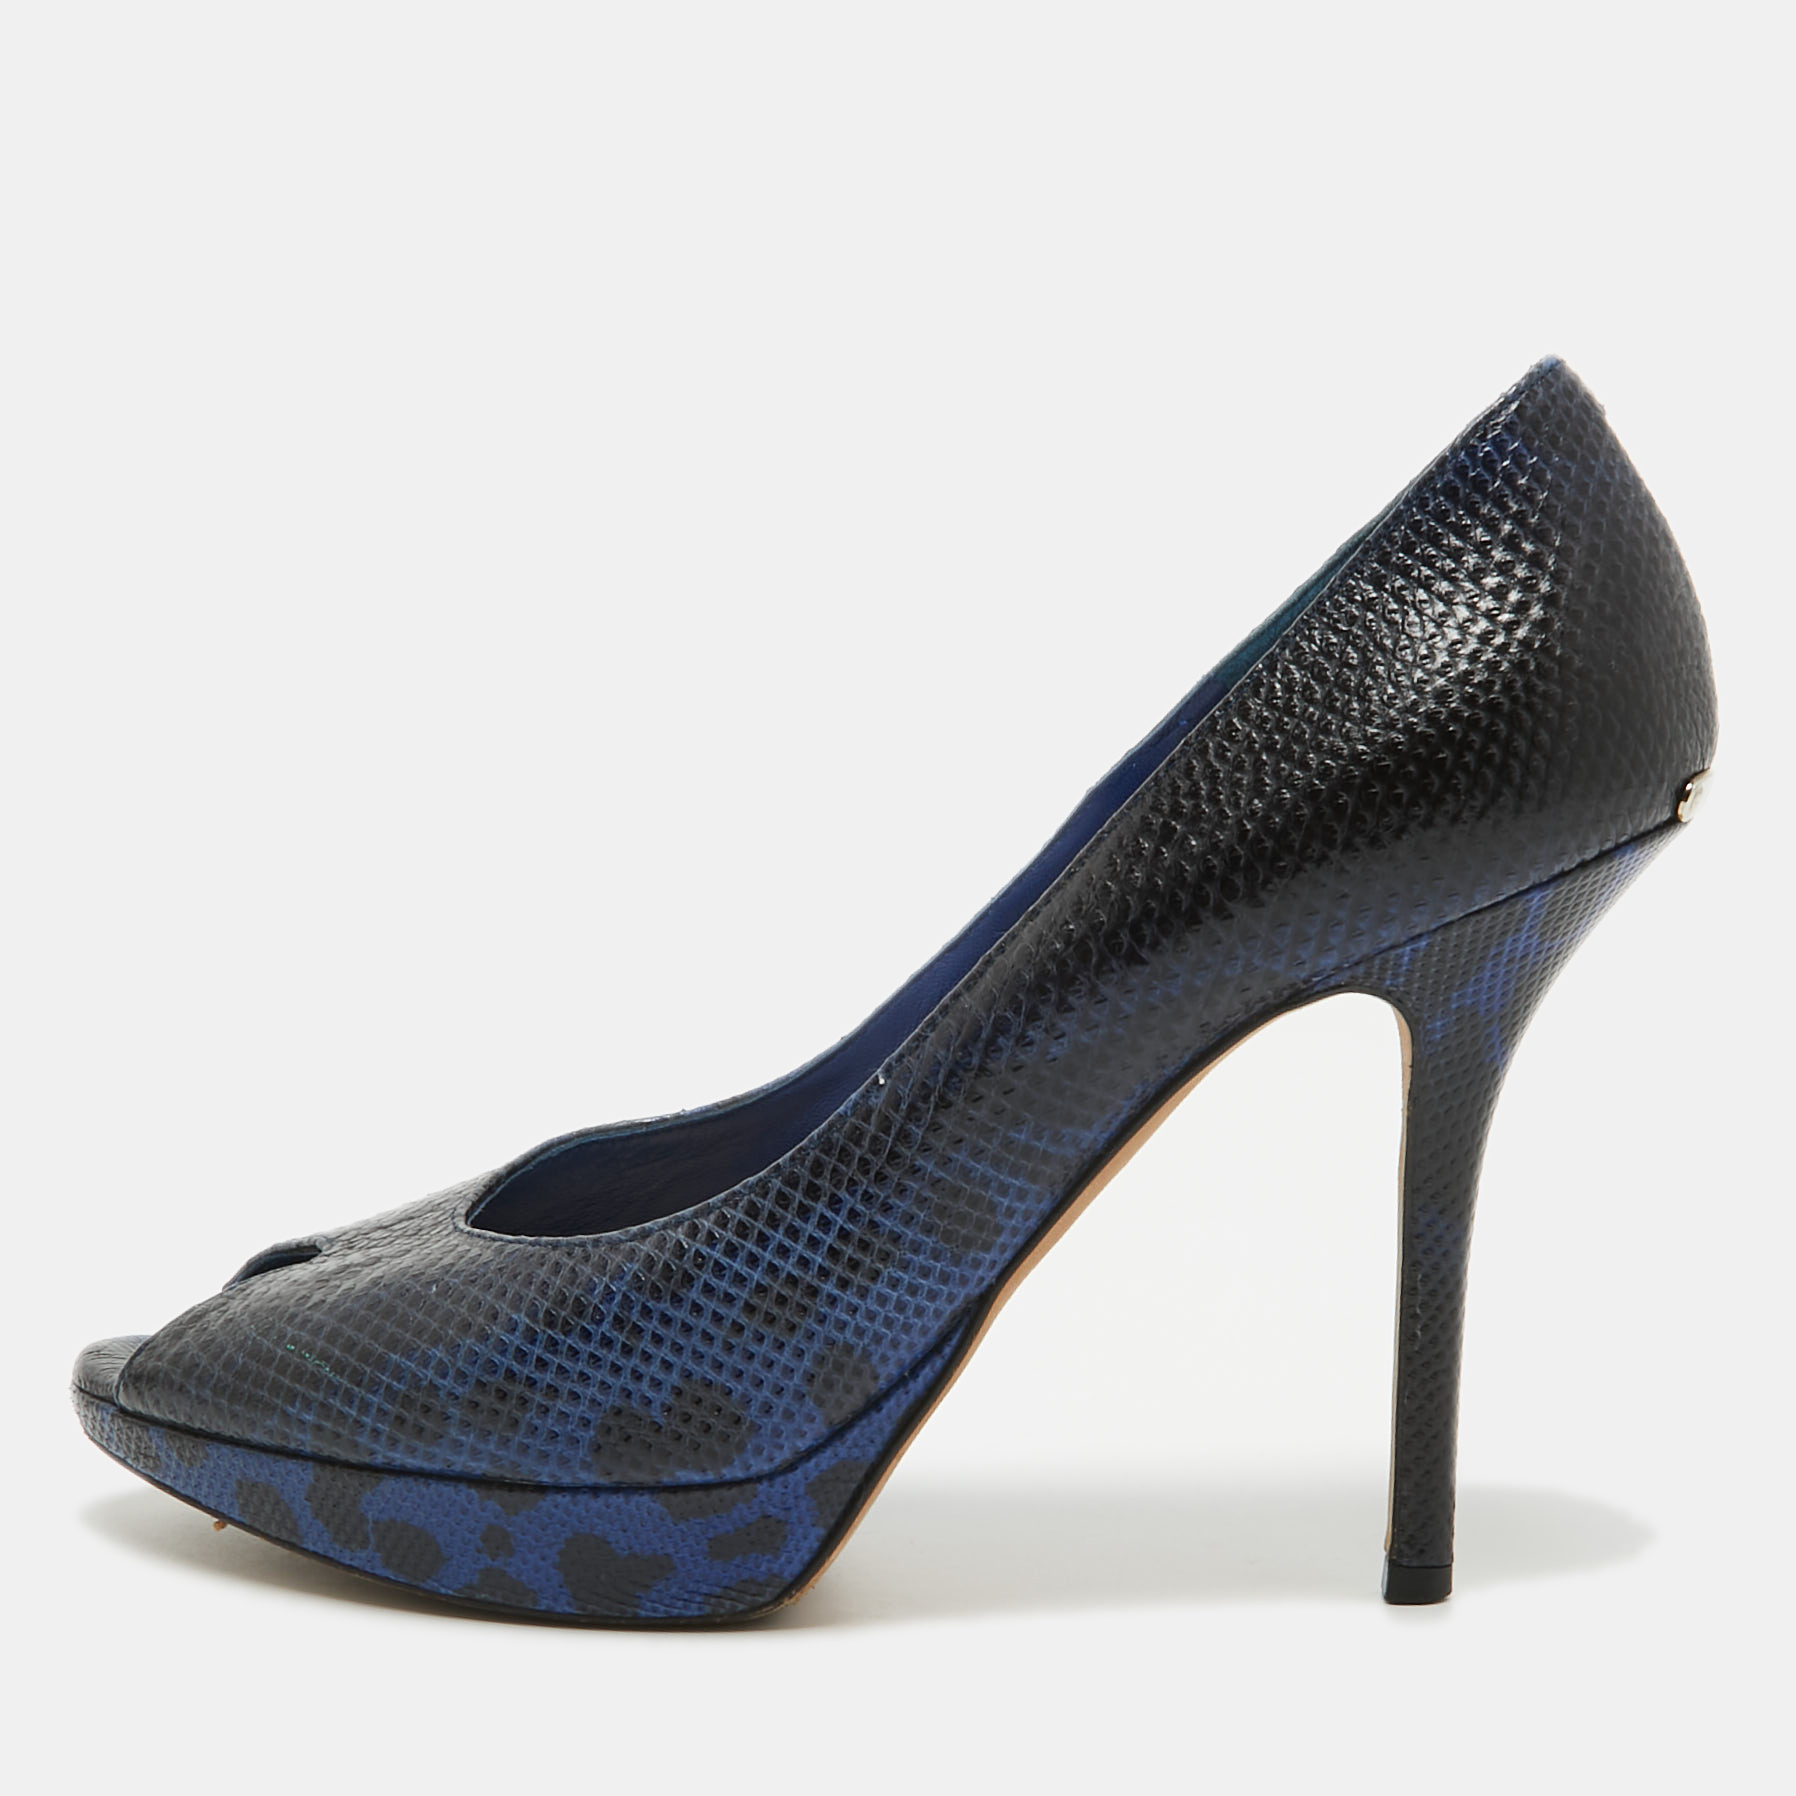 Dior navy blue/black sneak embossed miss dior pumps size 39.5